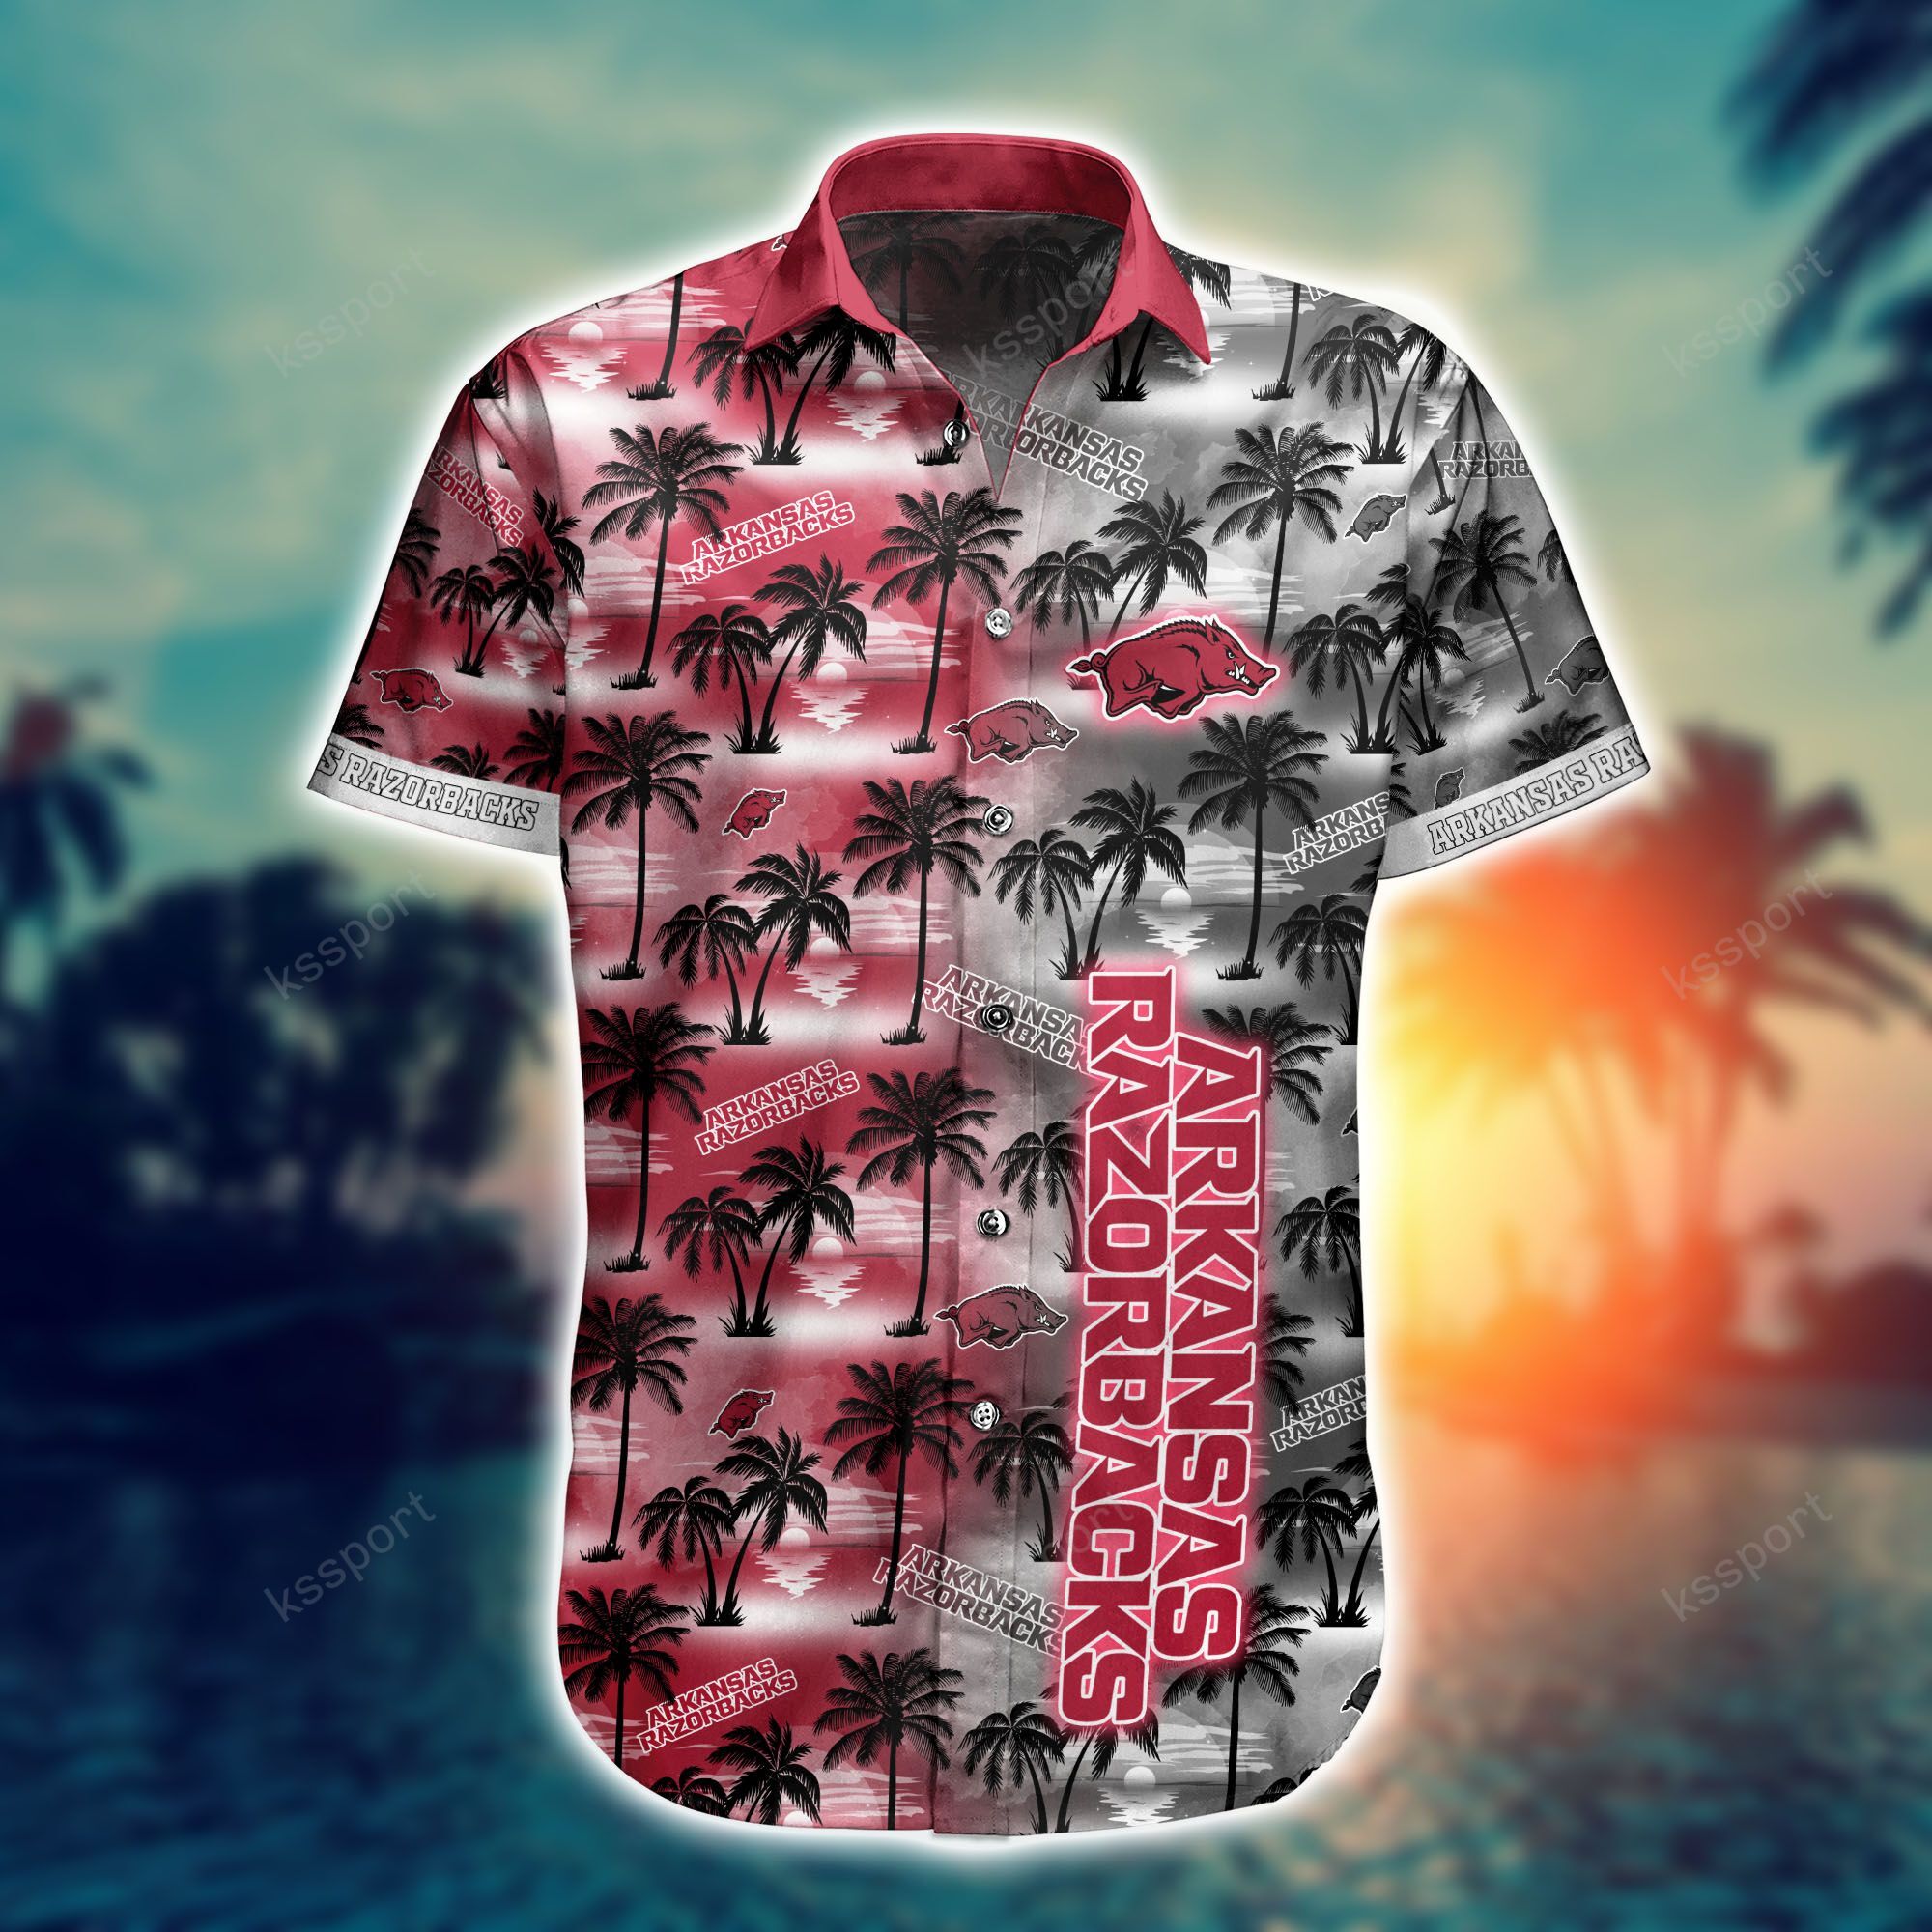 Hawaiian shirt and shorts is a great way to look stylish at a beach party 1